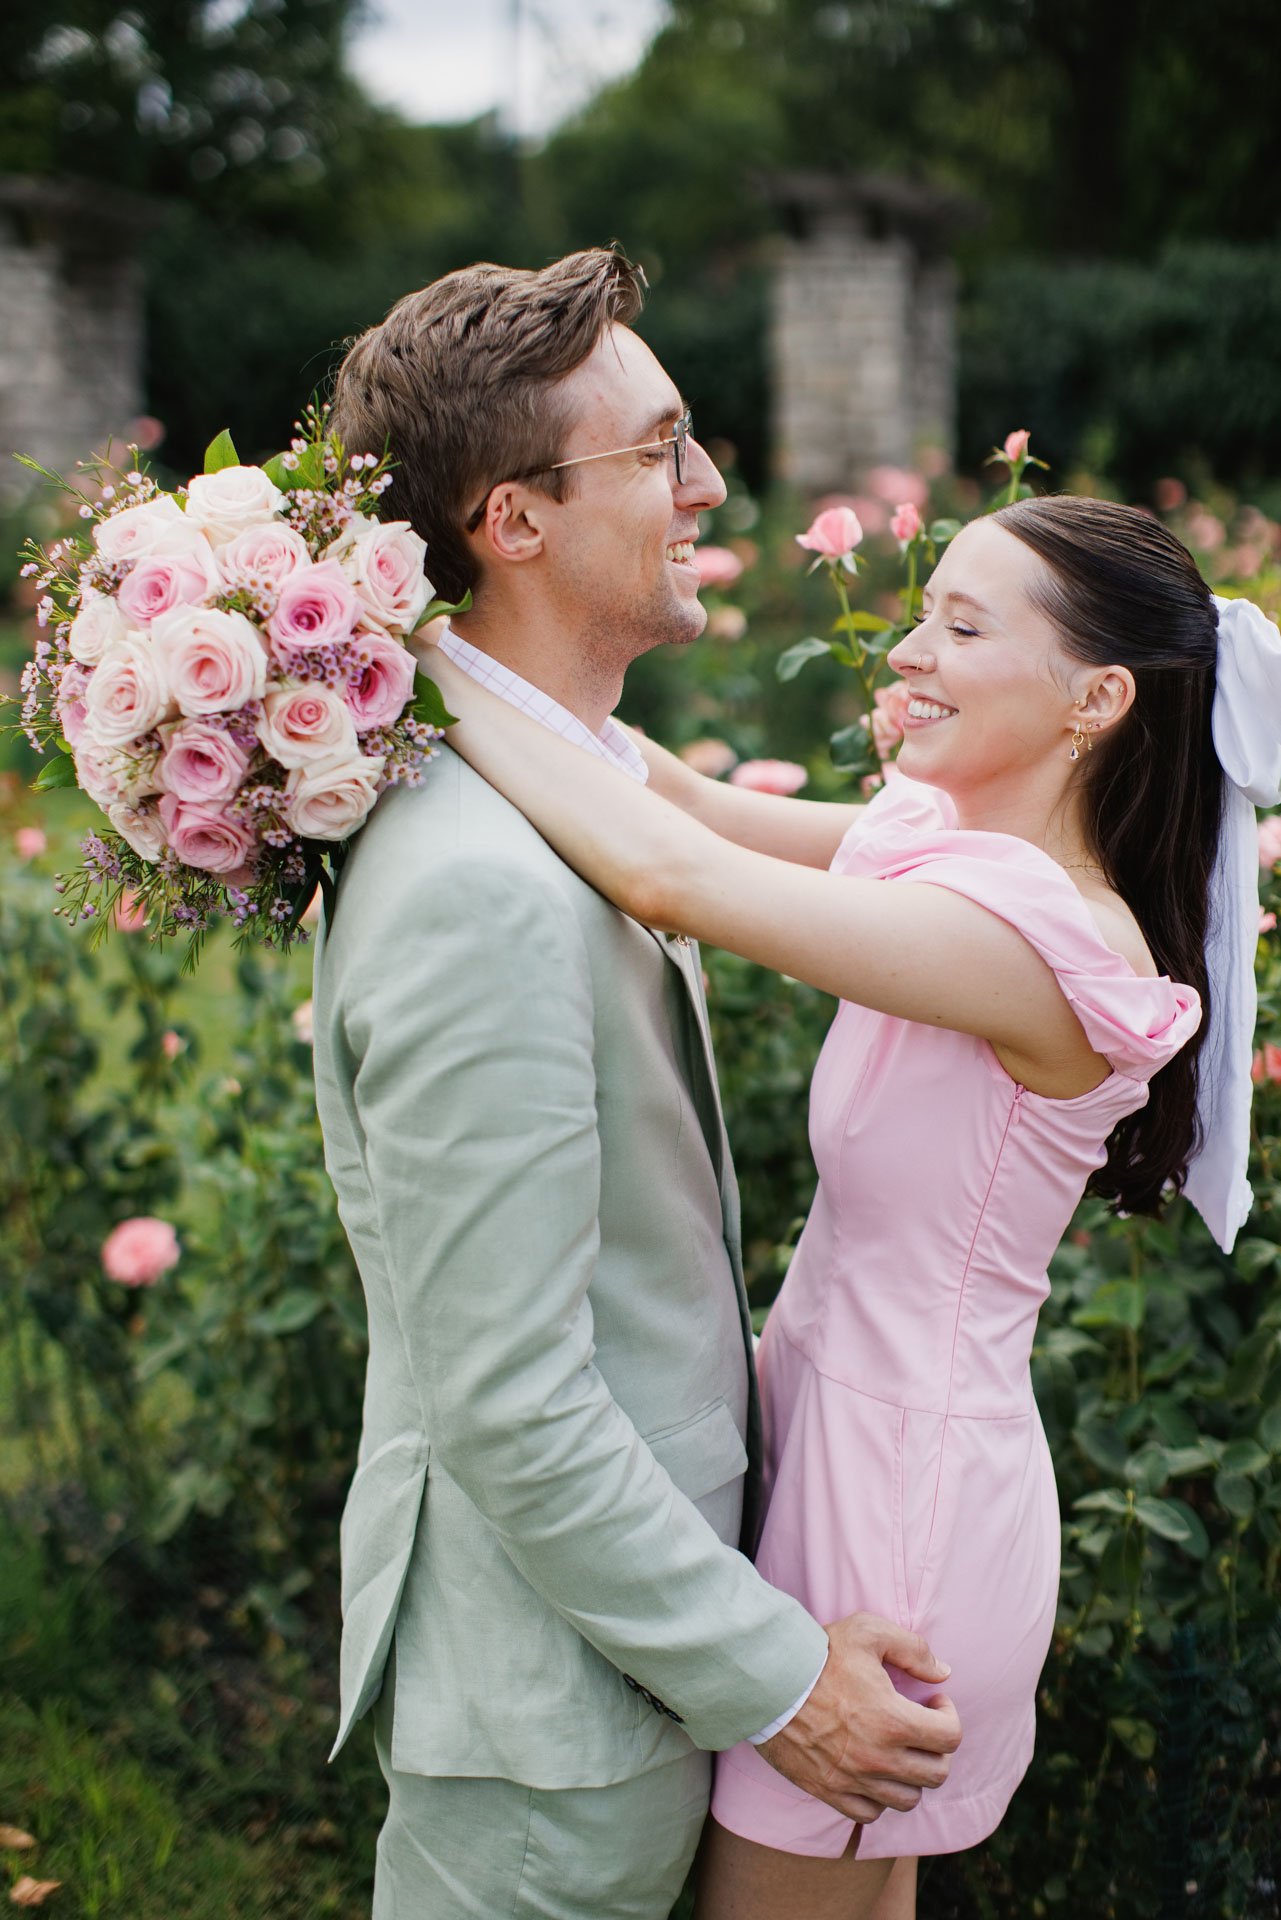 Kindling Wedding Photography Kansas City x Loose Park Rose Garden Wedding Ceremony_06.JPG